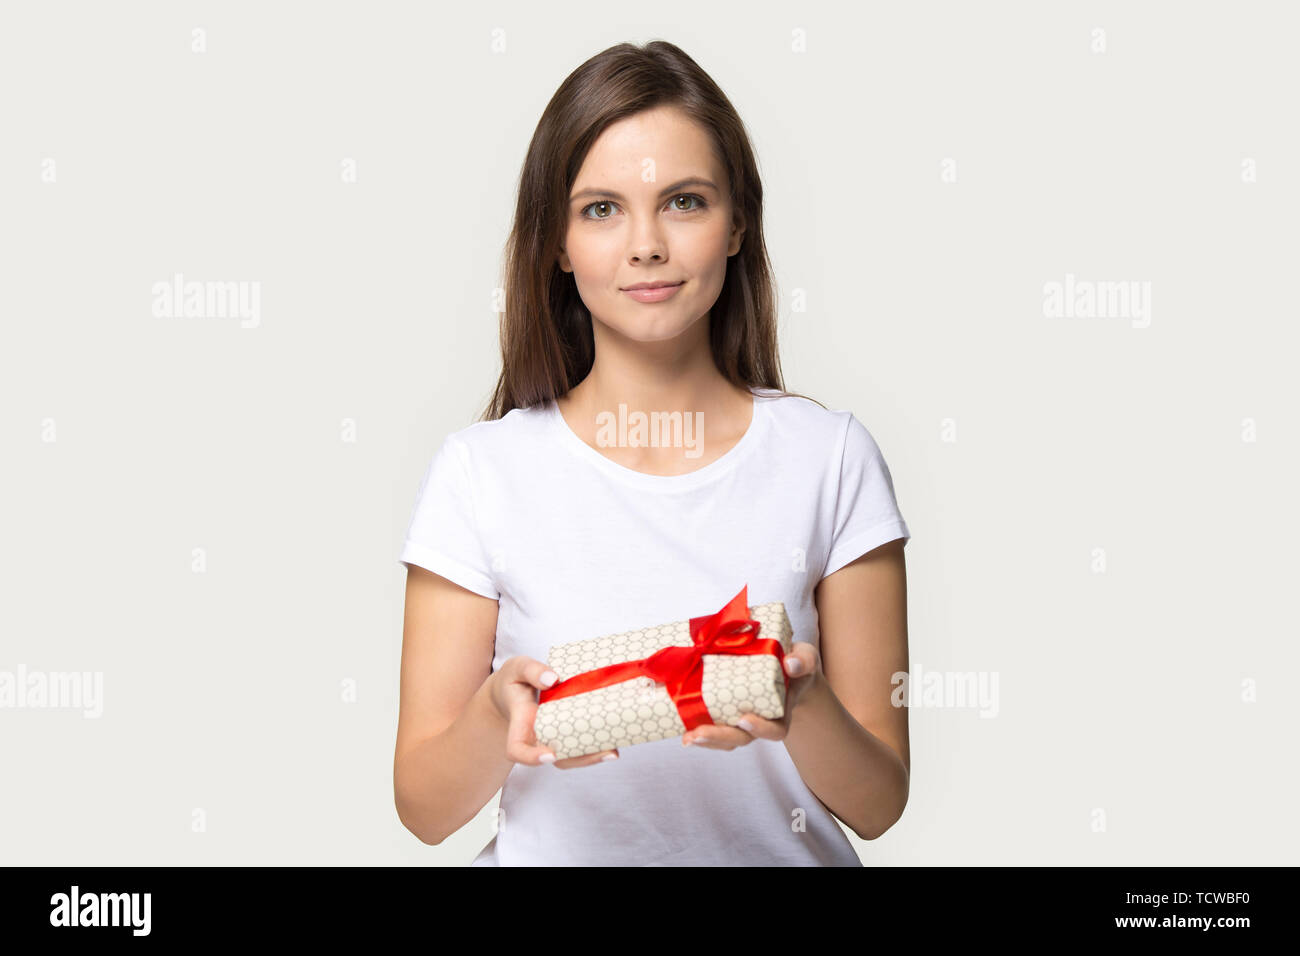 Millennial woman holding gift box looking at camera studio shot Stock Photo